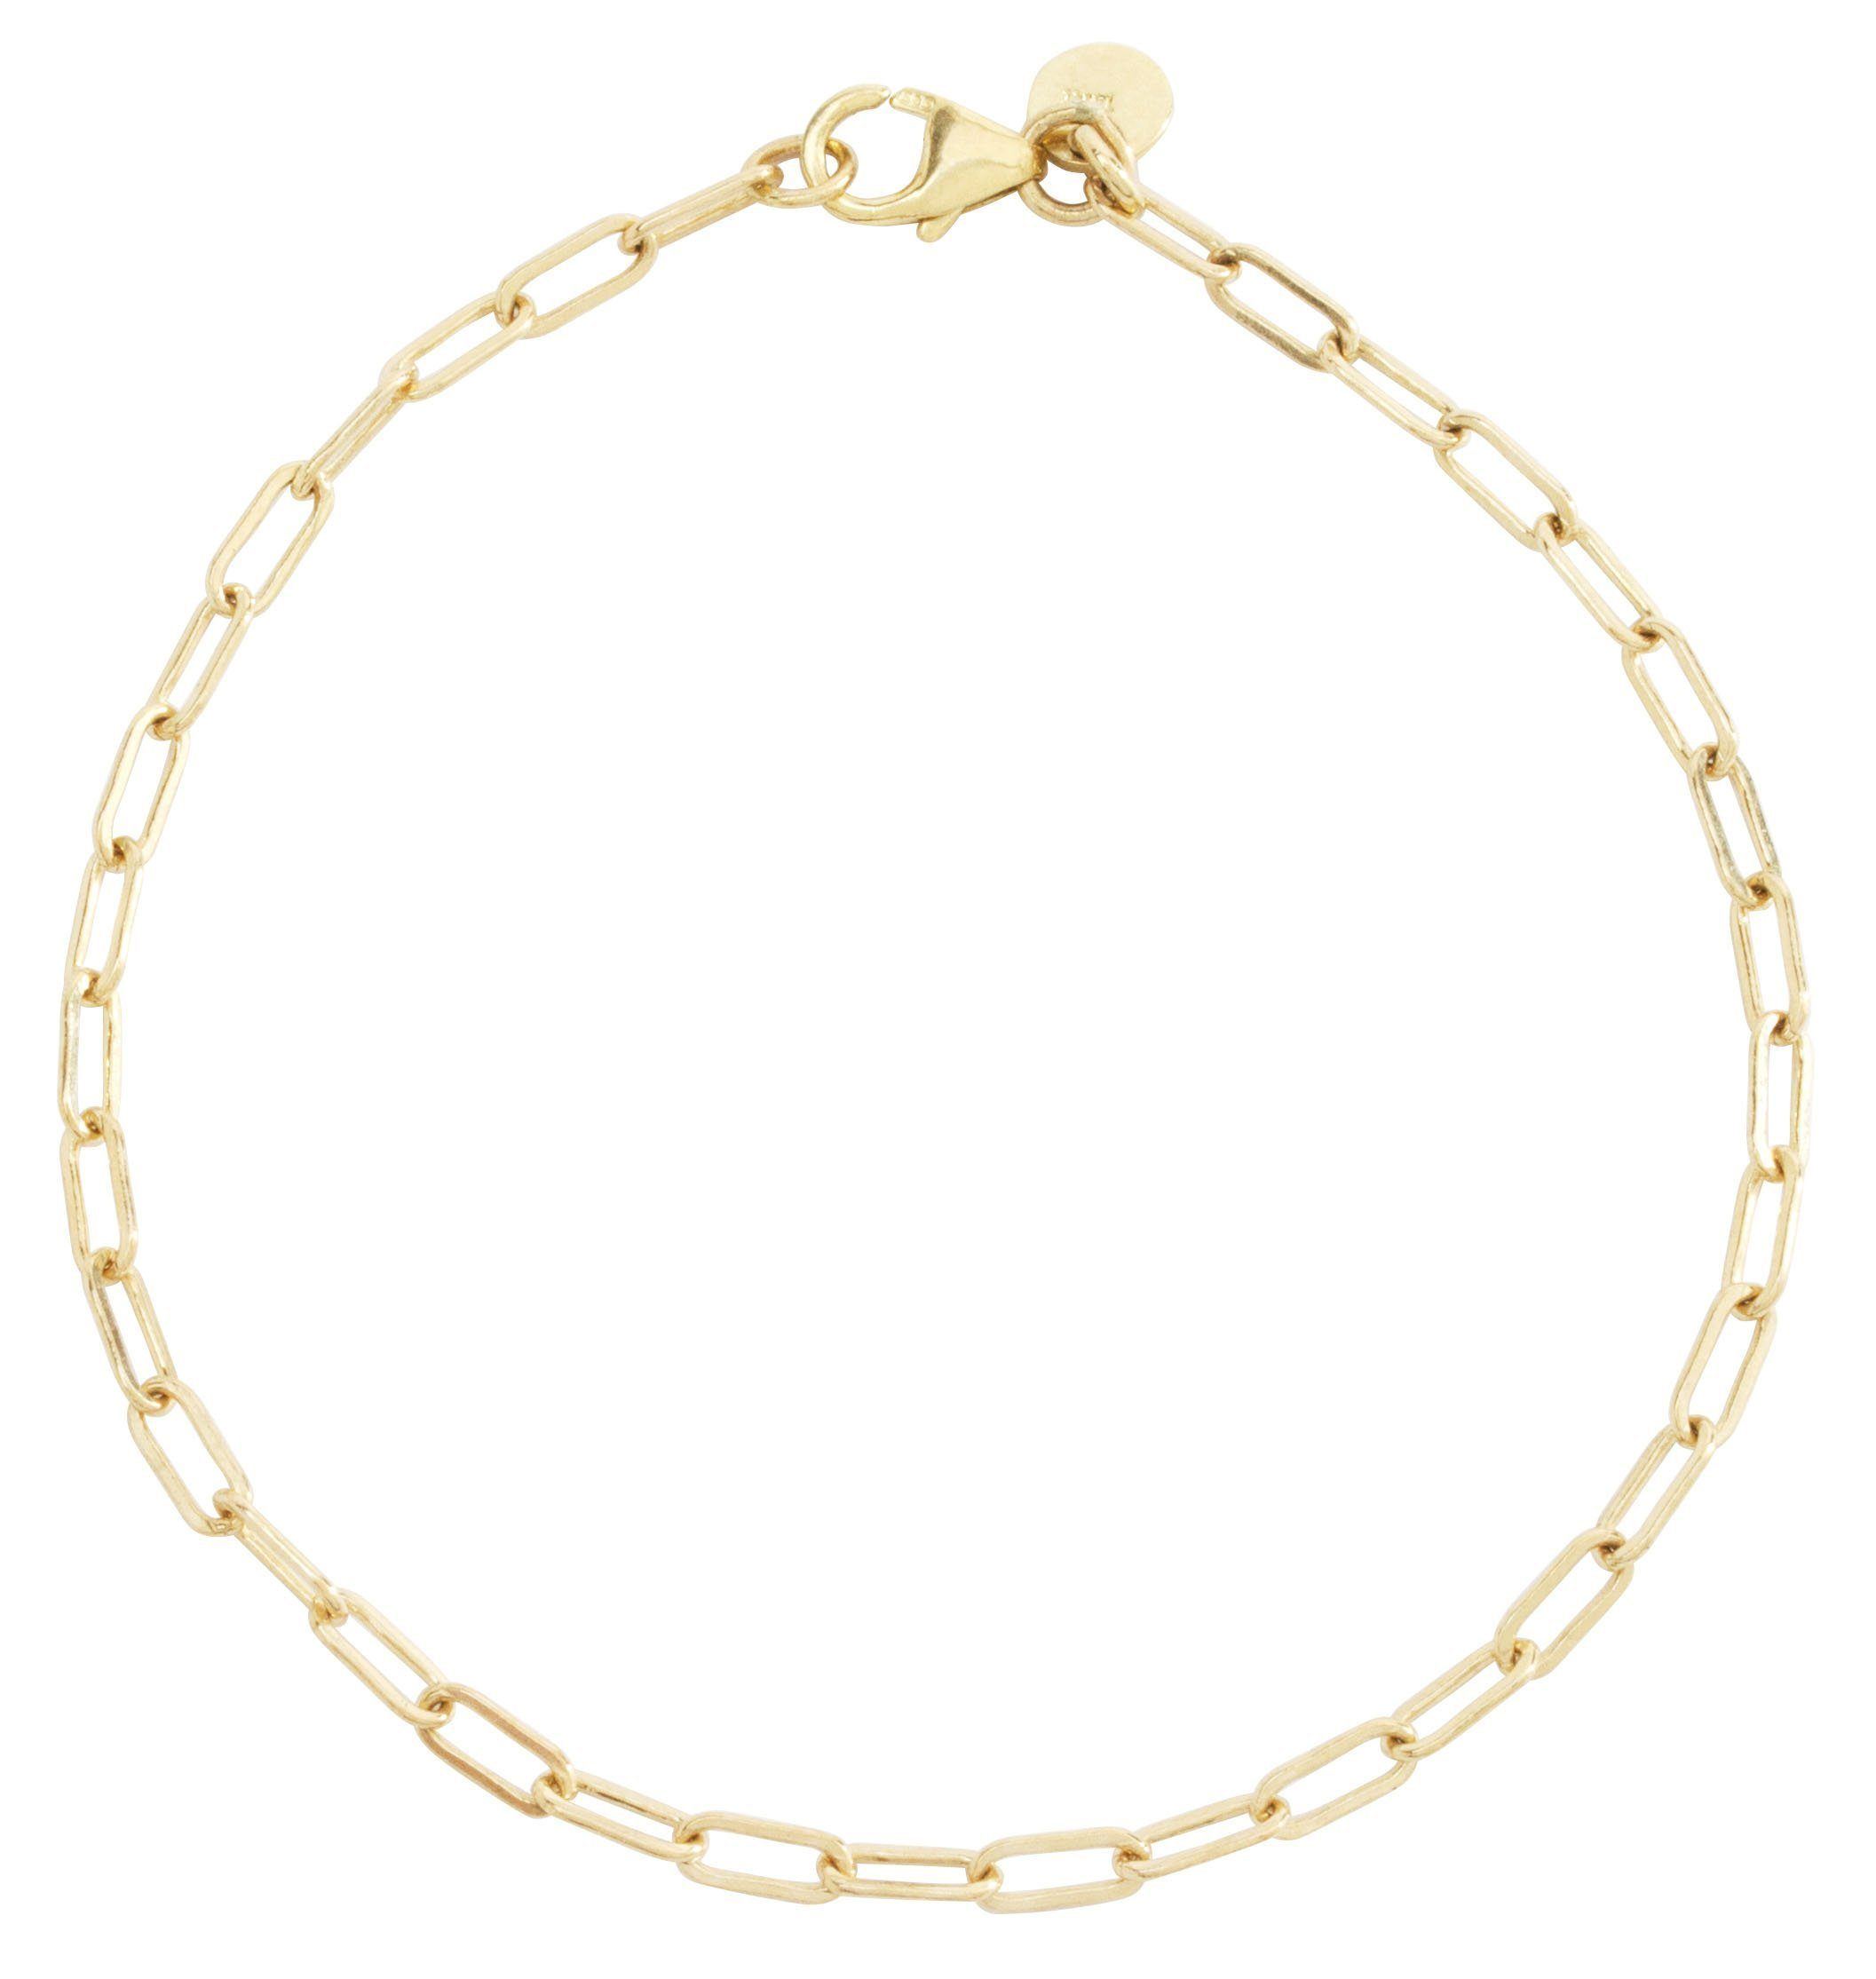 Customizable 14k Yellow Gold Charm Bracelet